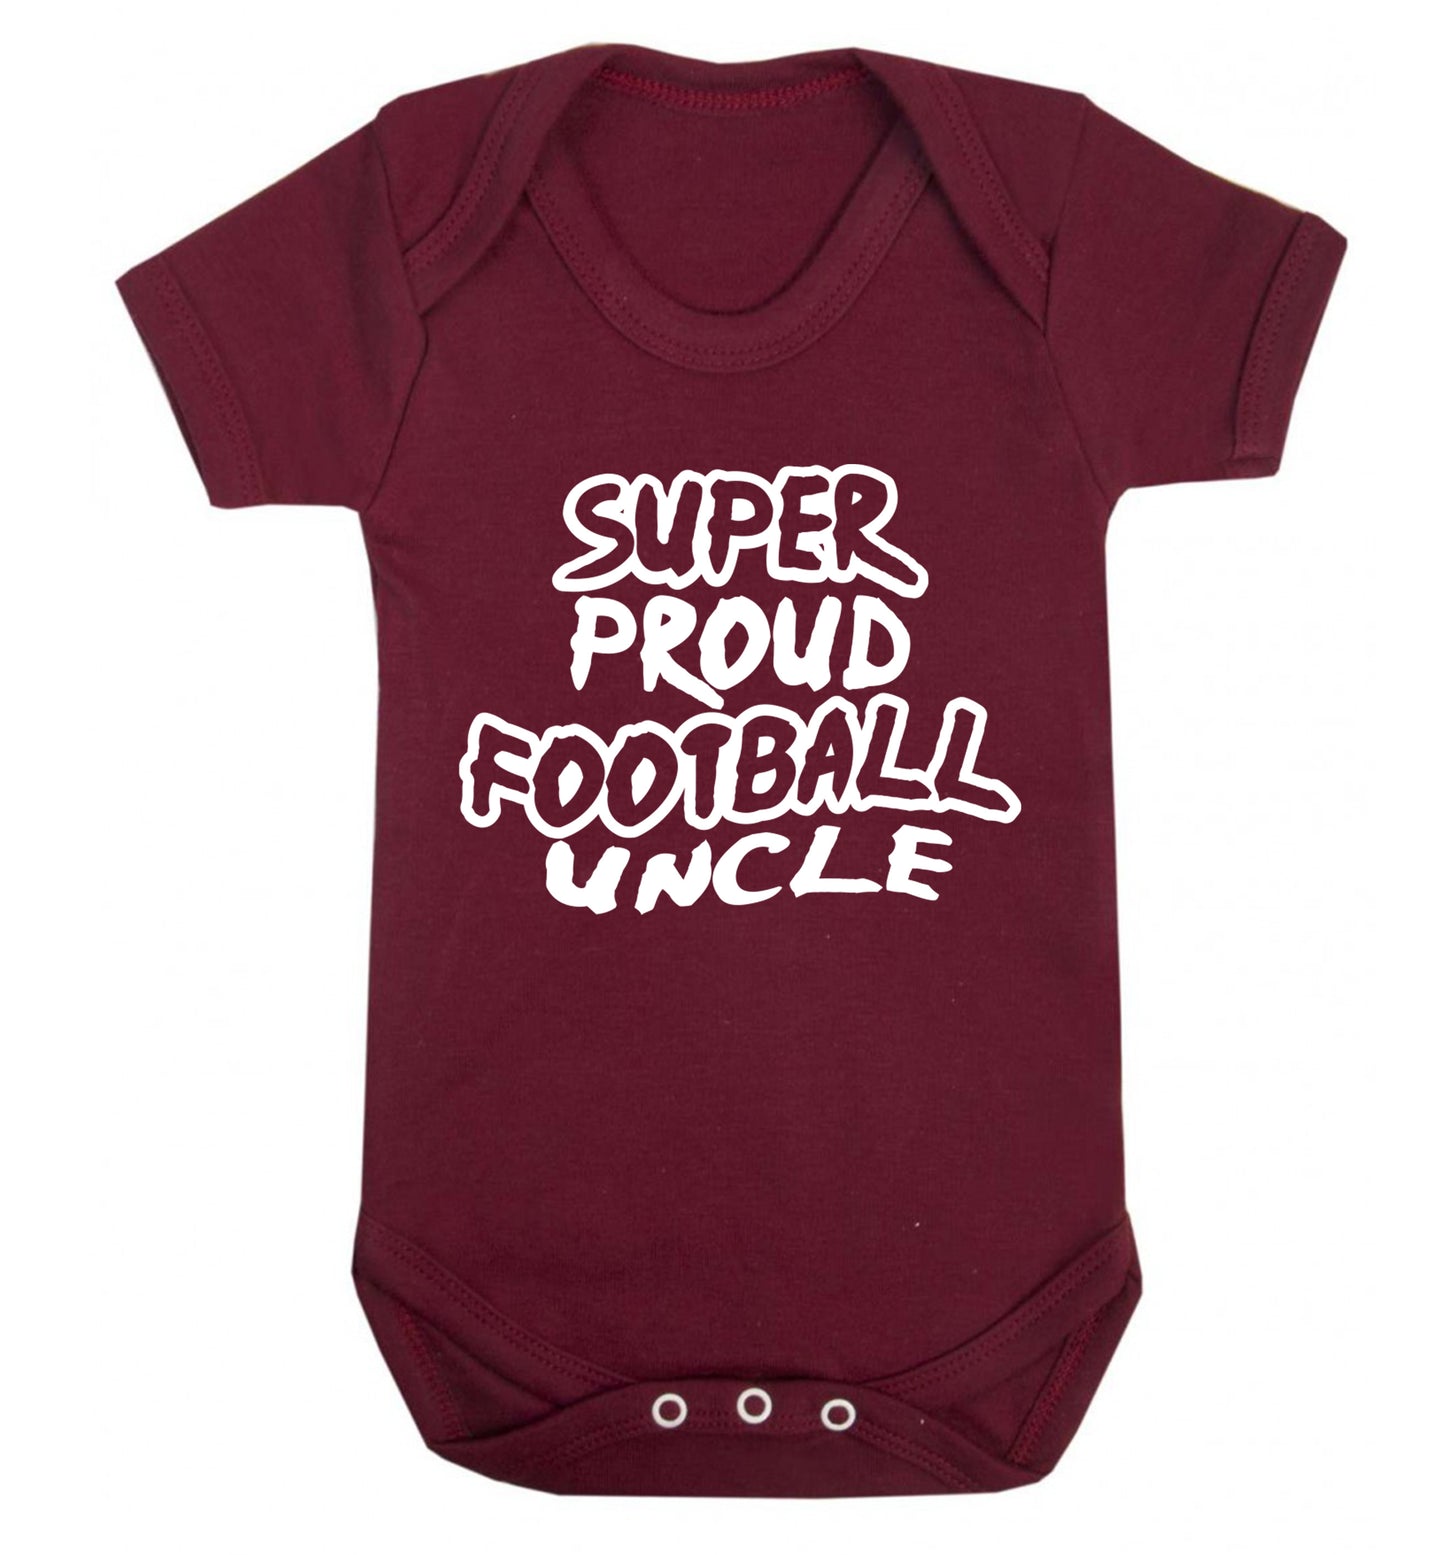 Super proud football uncle Baby Vest maroon 18-24 months